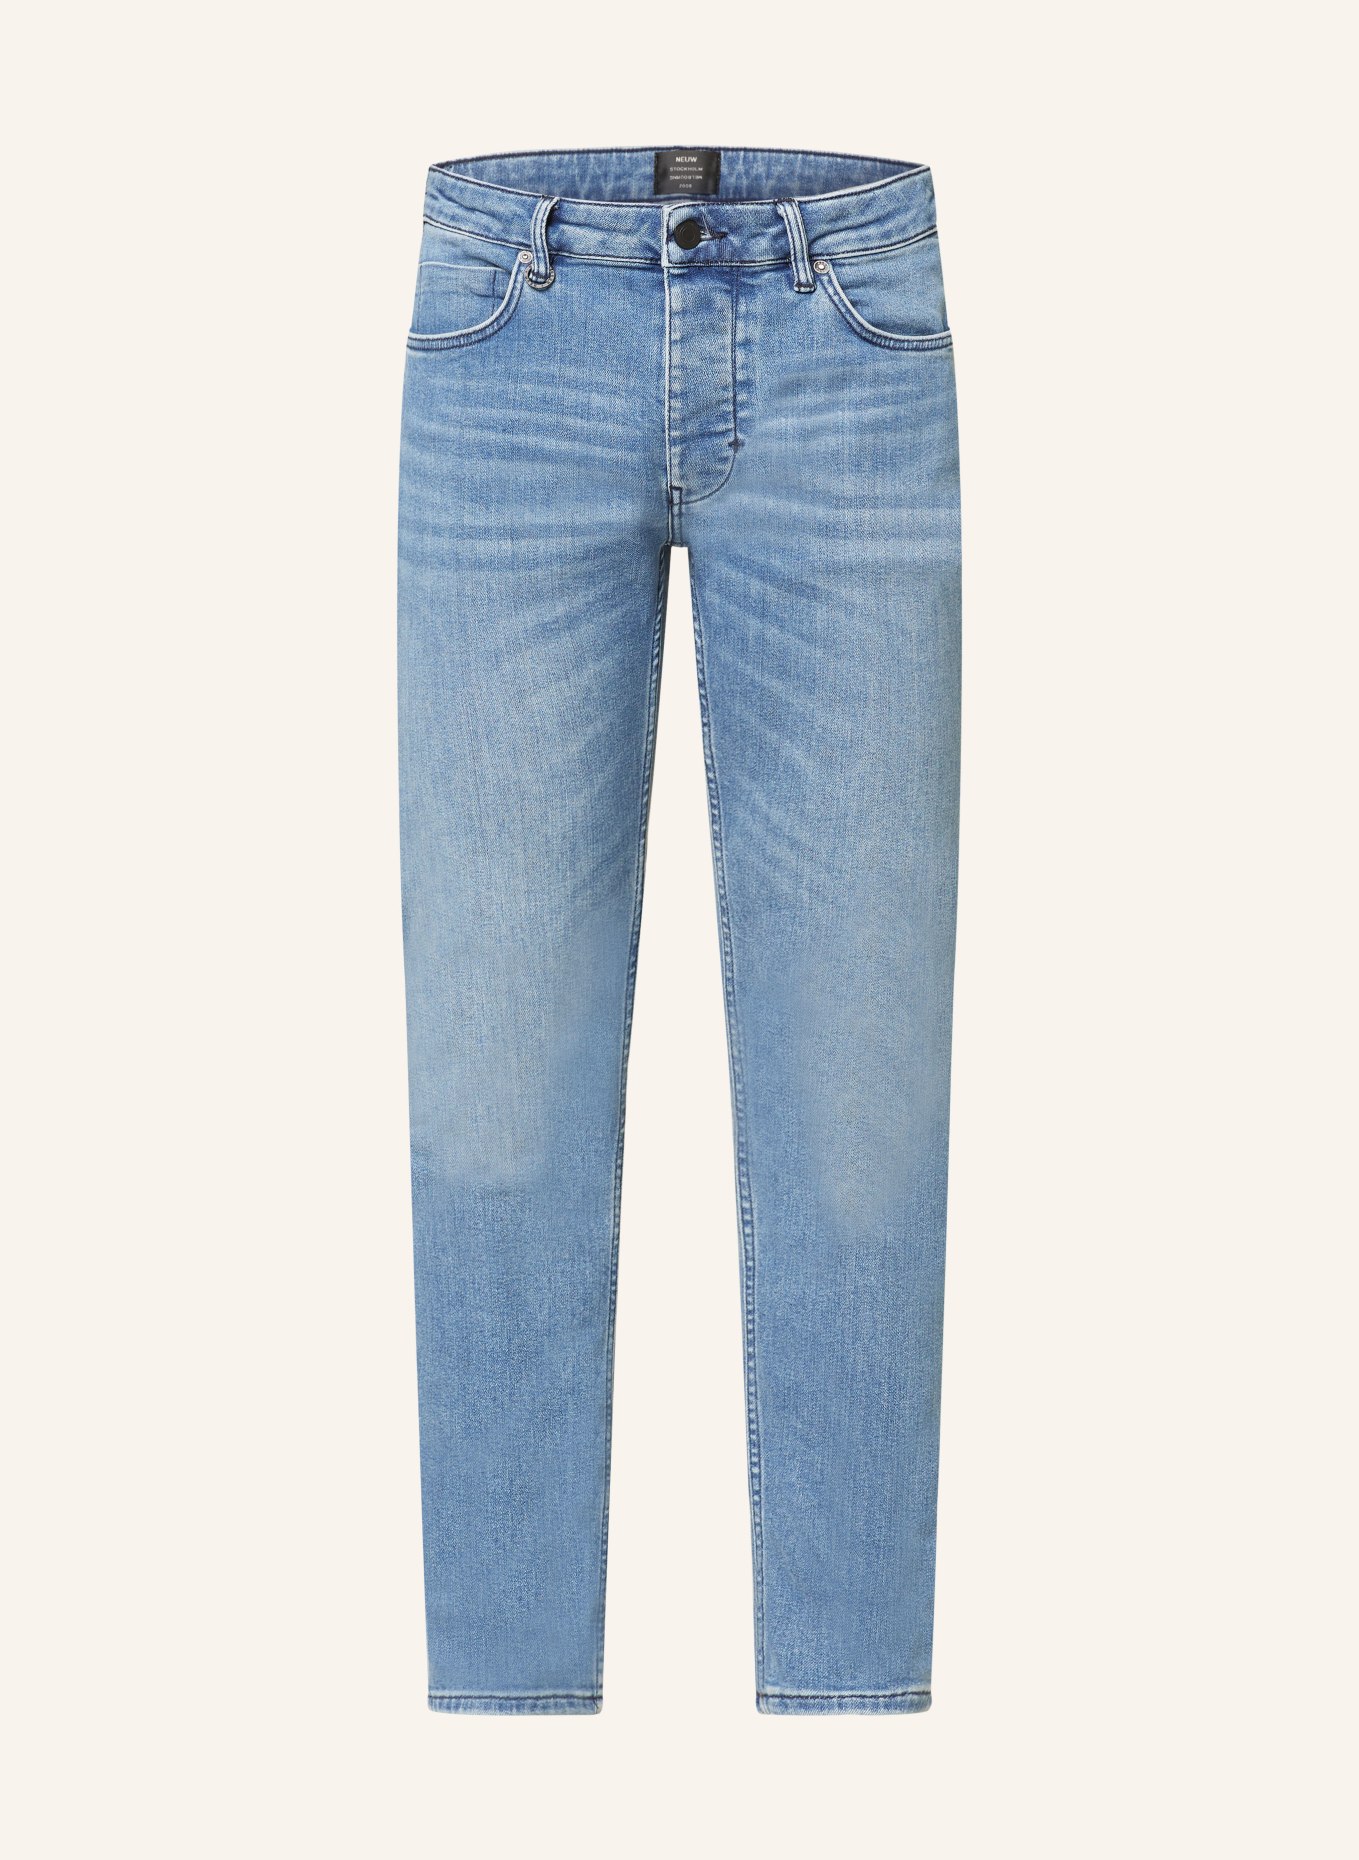 NEUW Jeans RAY Slim Tapered Fit, Farbe: 6690 DESCEND (Bild 1)